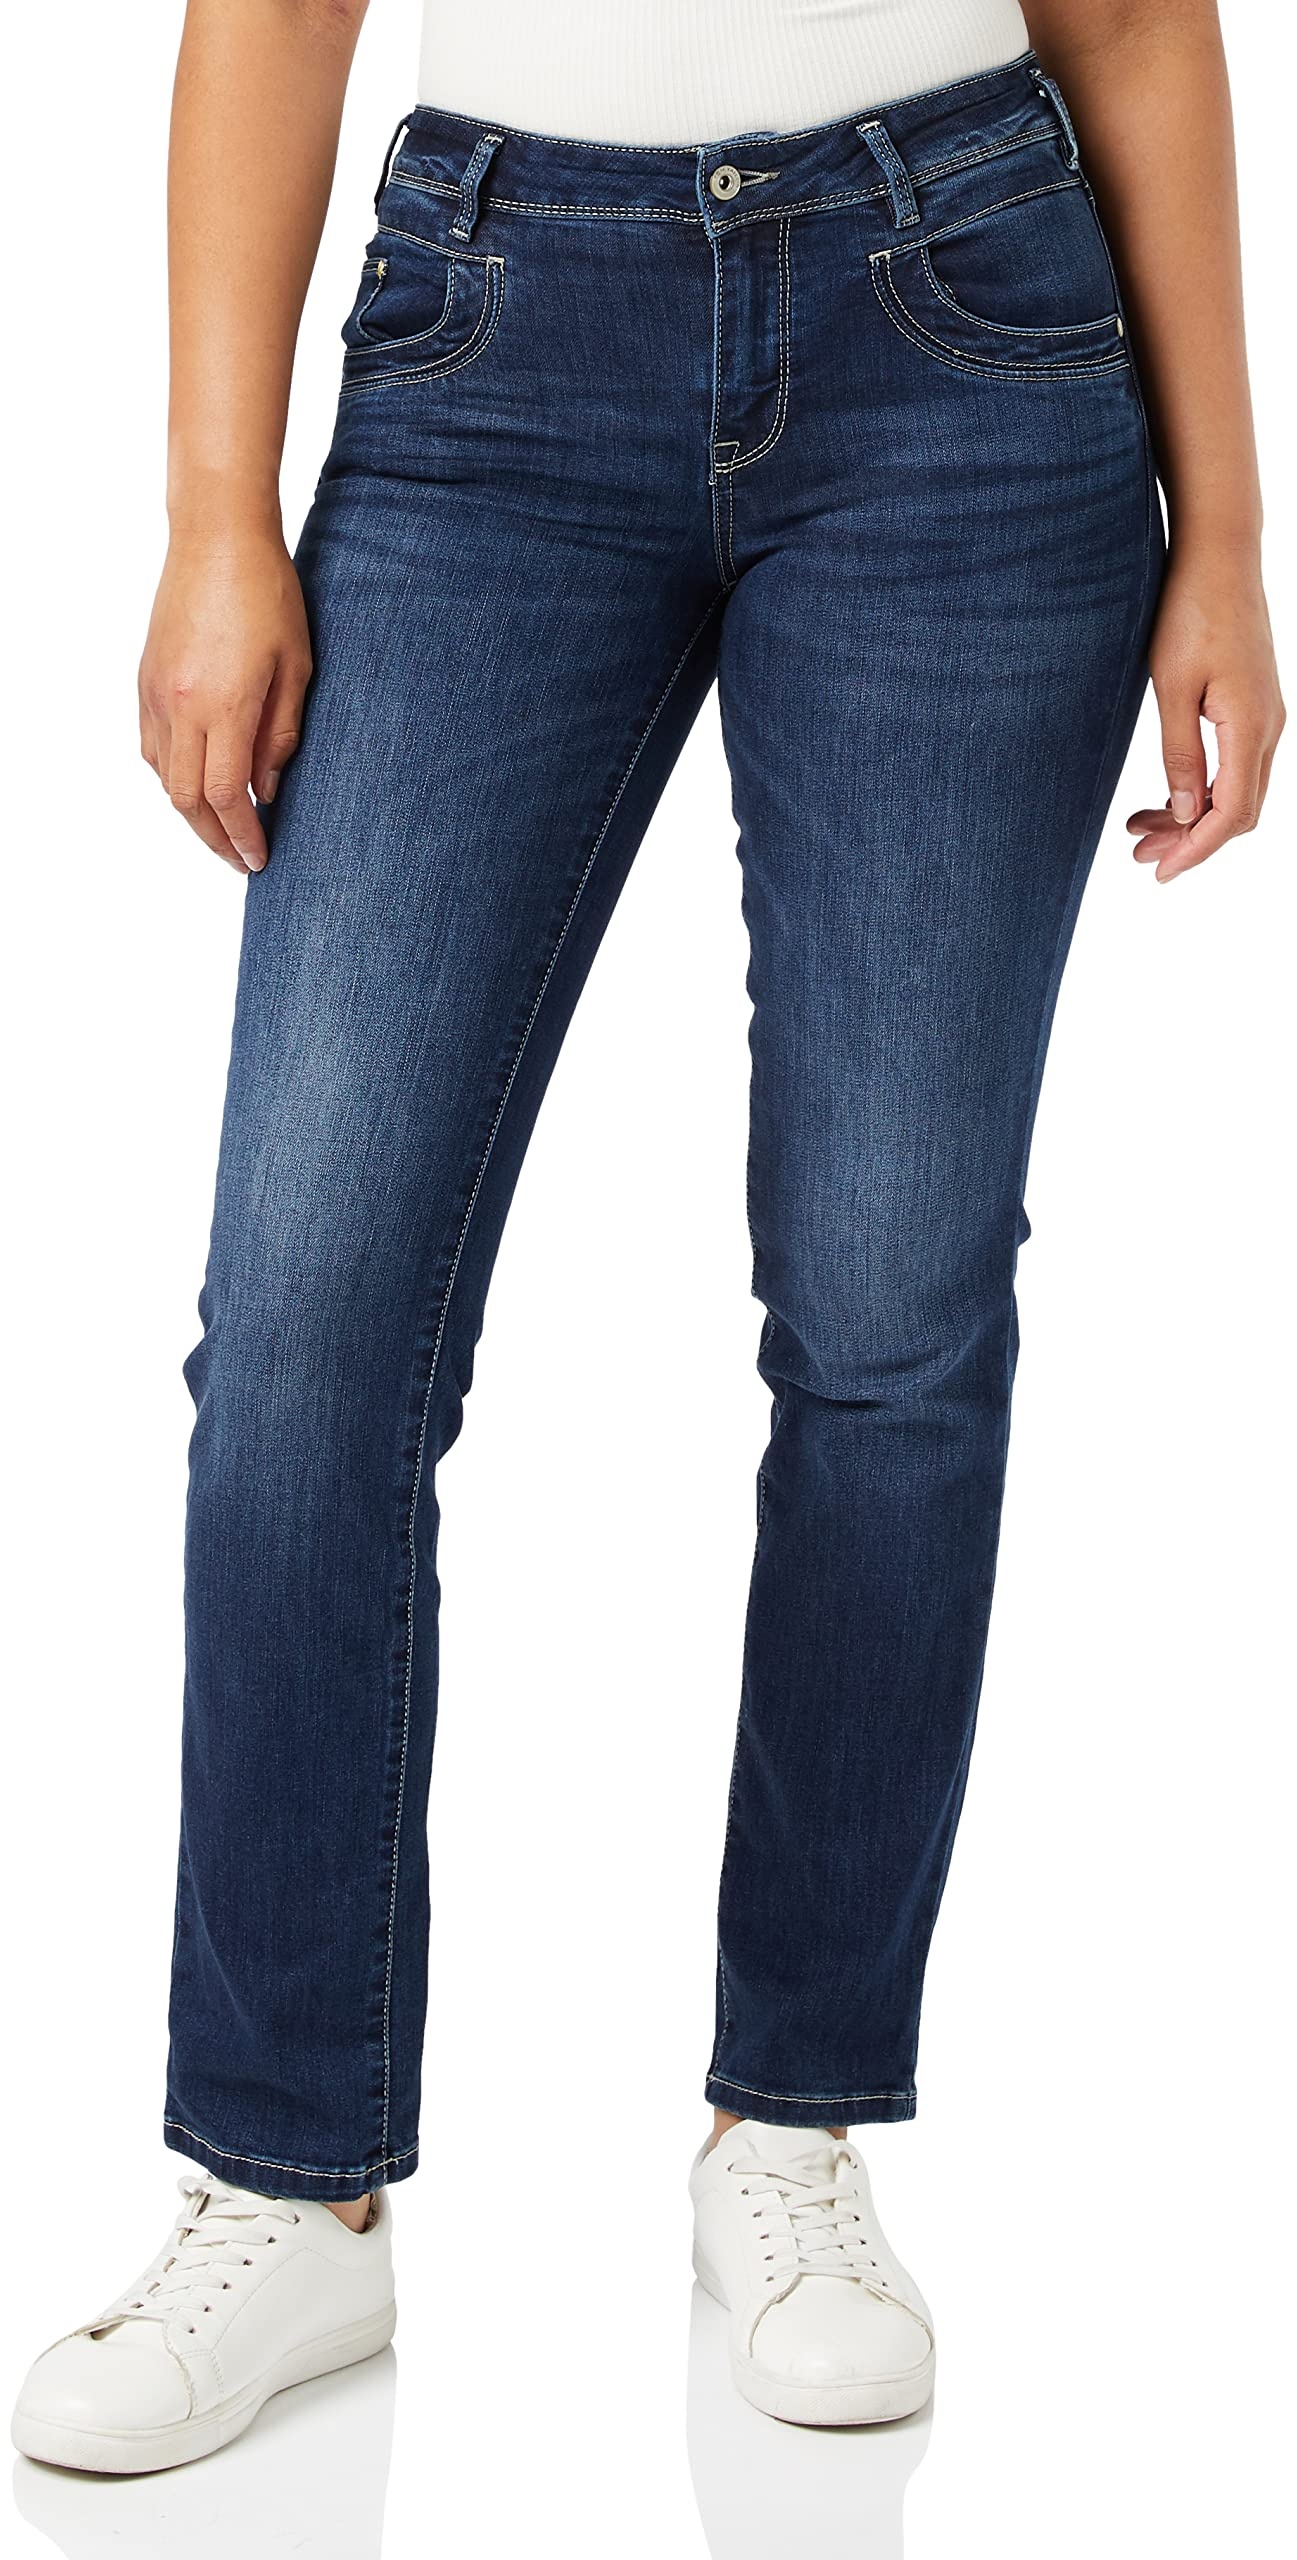 TOM TAILOR Damen 1008146 Alexa Straight Jeans, 10282 - Dark Stone Wash Denim, 32W / 30L EU